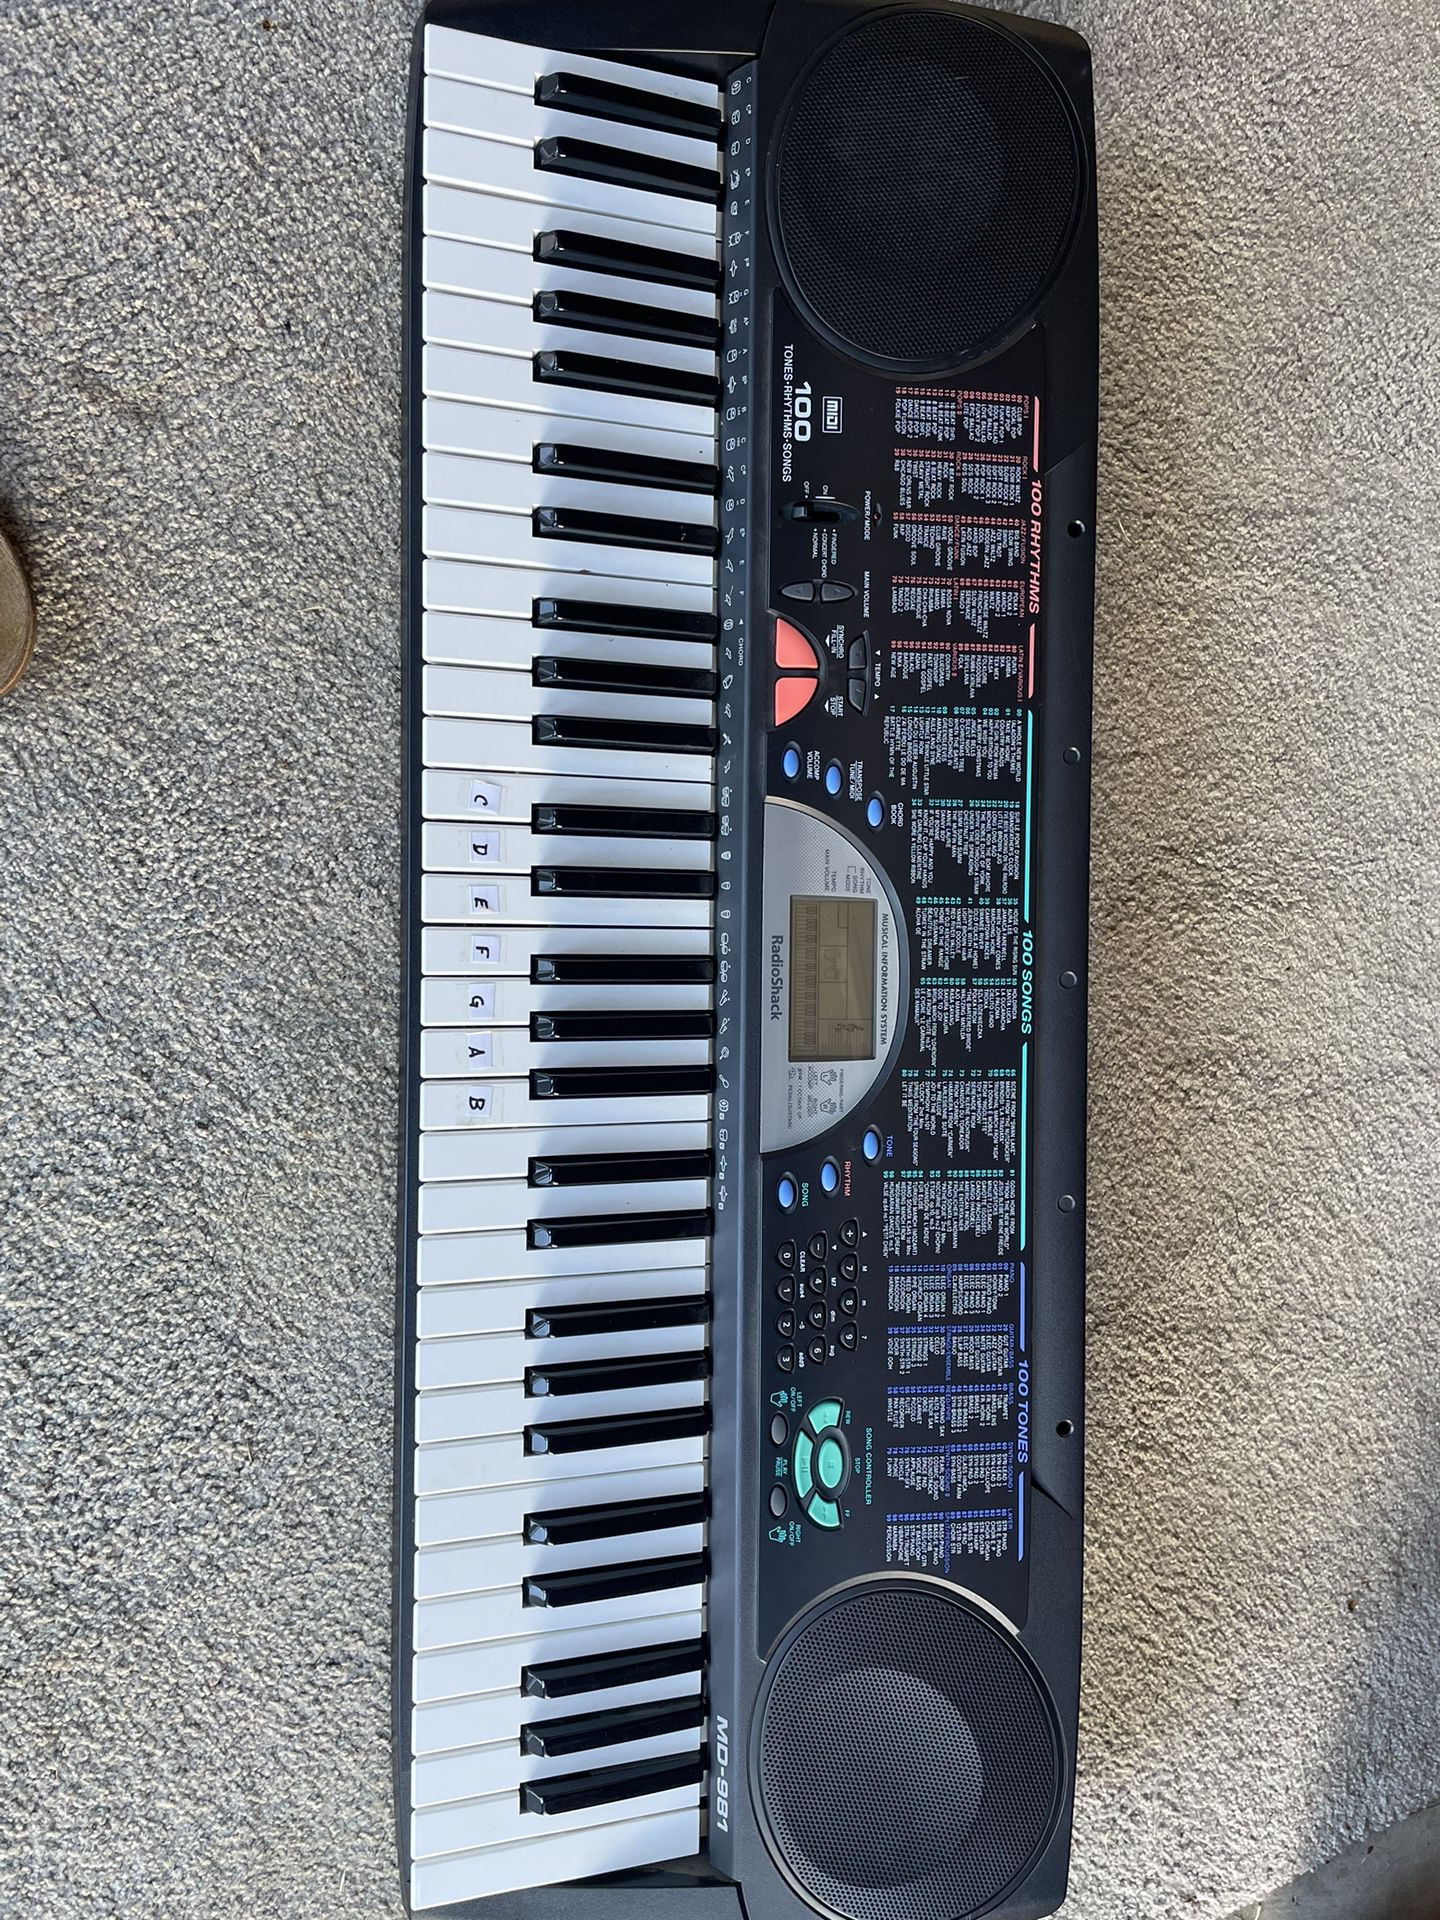 Keyboard MD-981